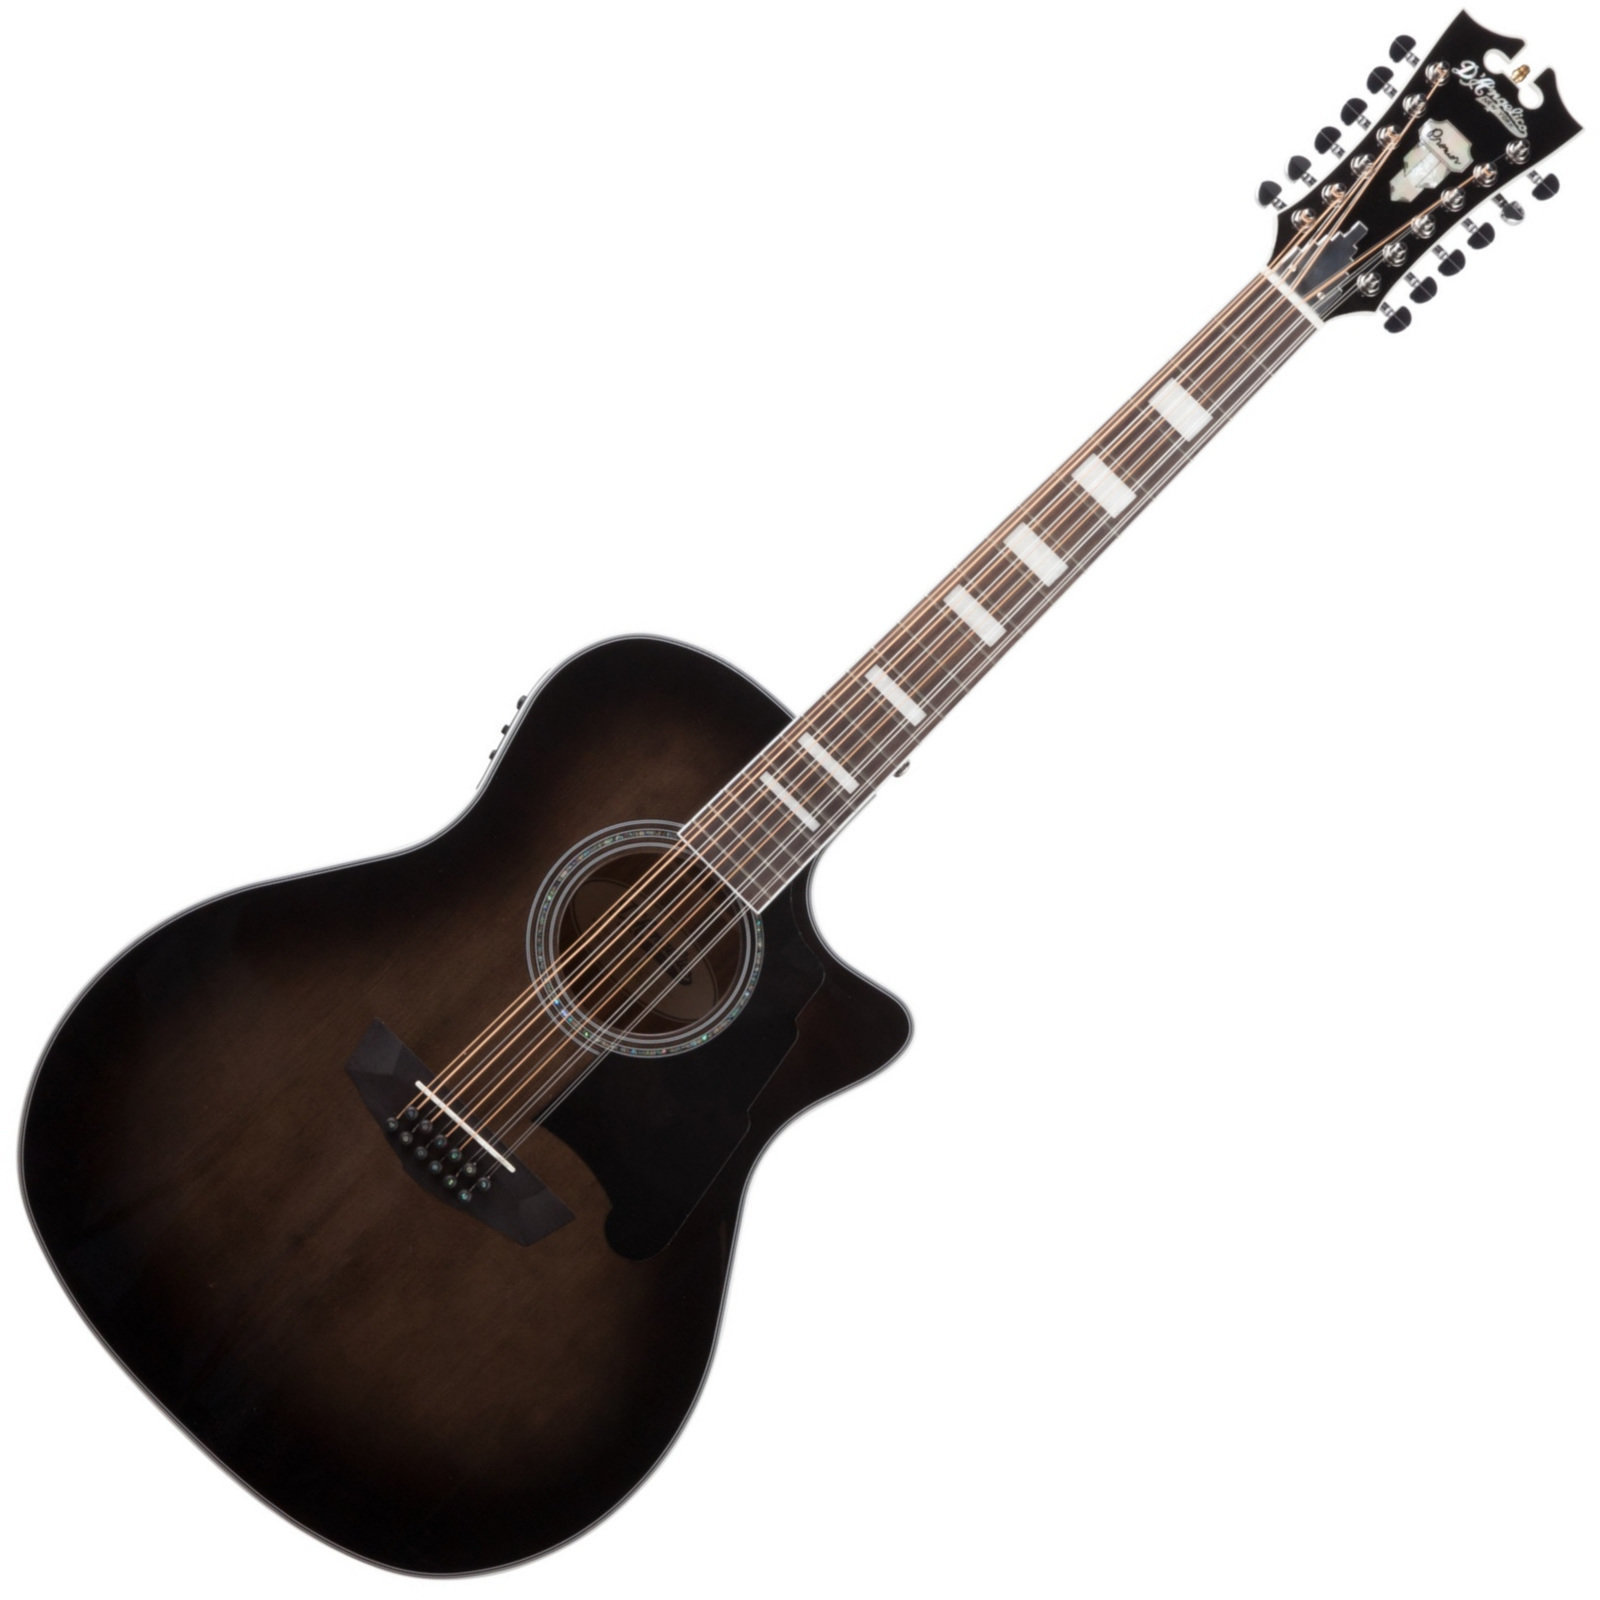 12-saitige Elektro-Akustikgitarre D'Angelico Premier Fulton Gray Black